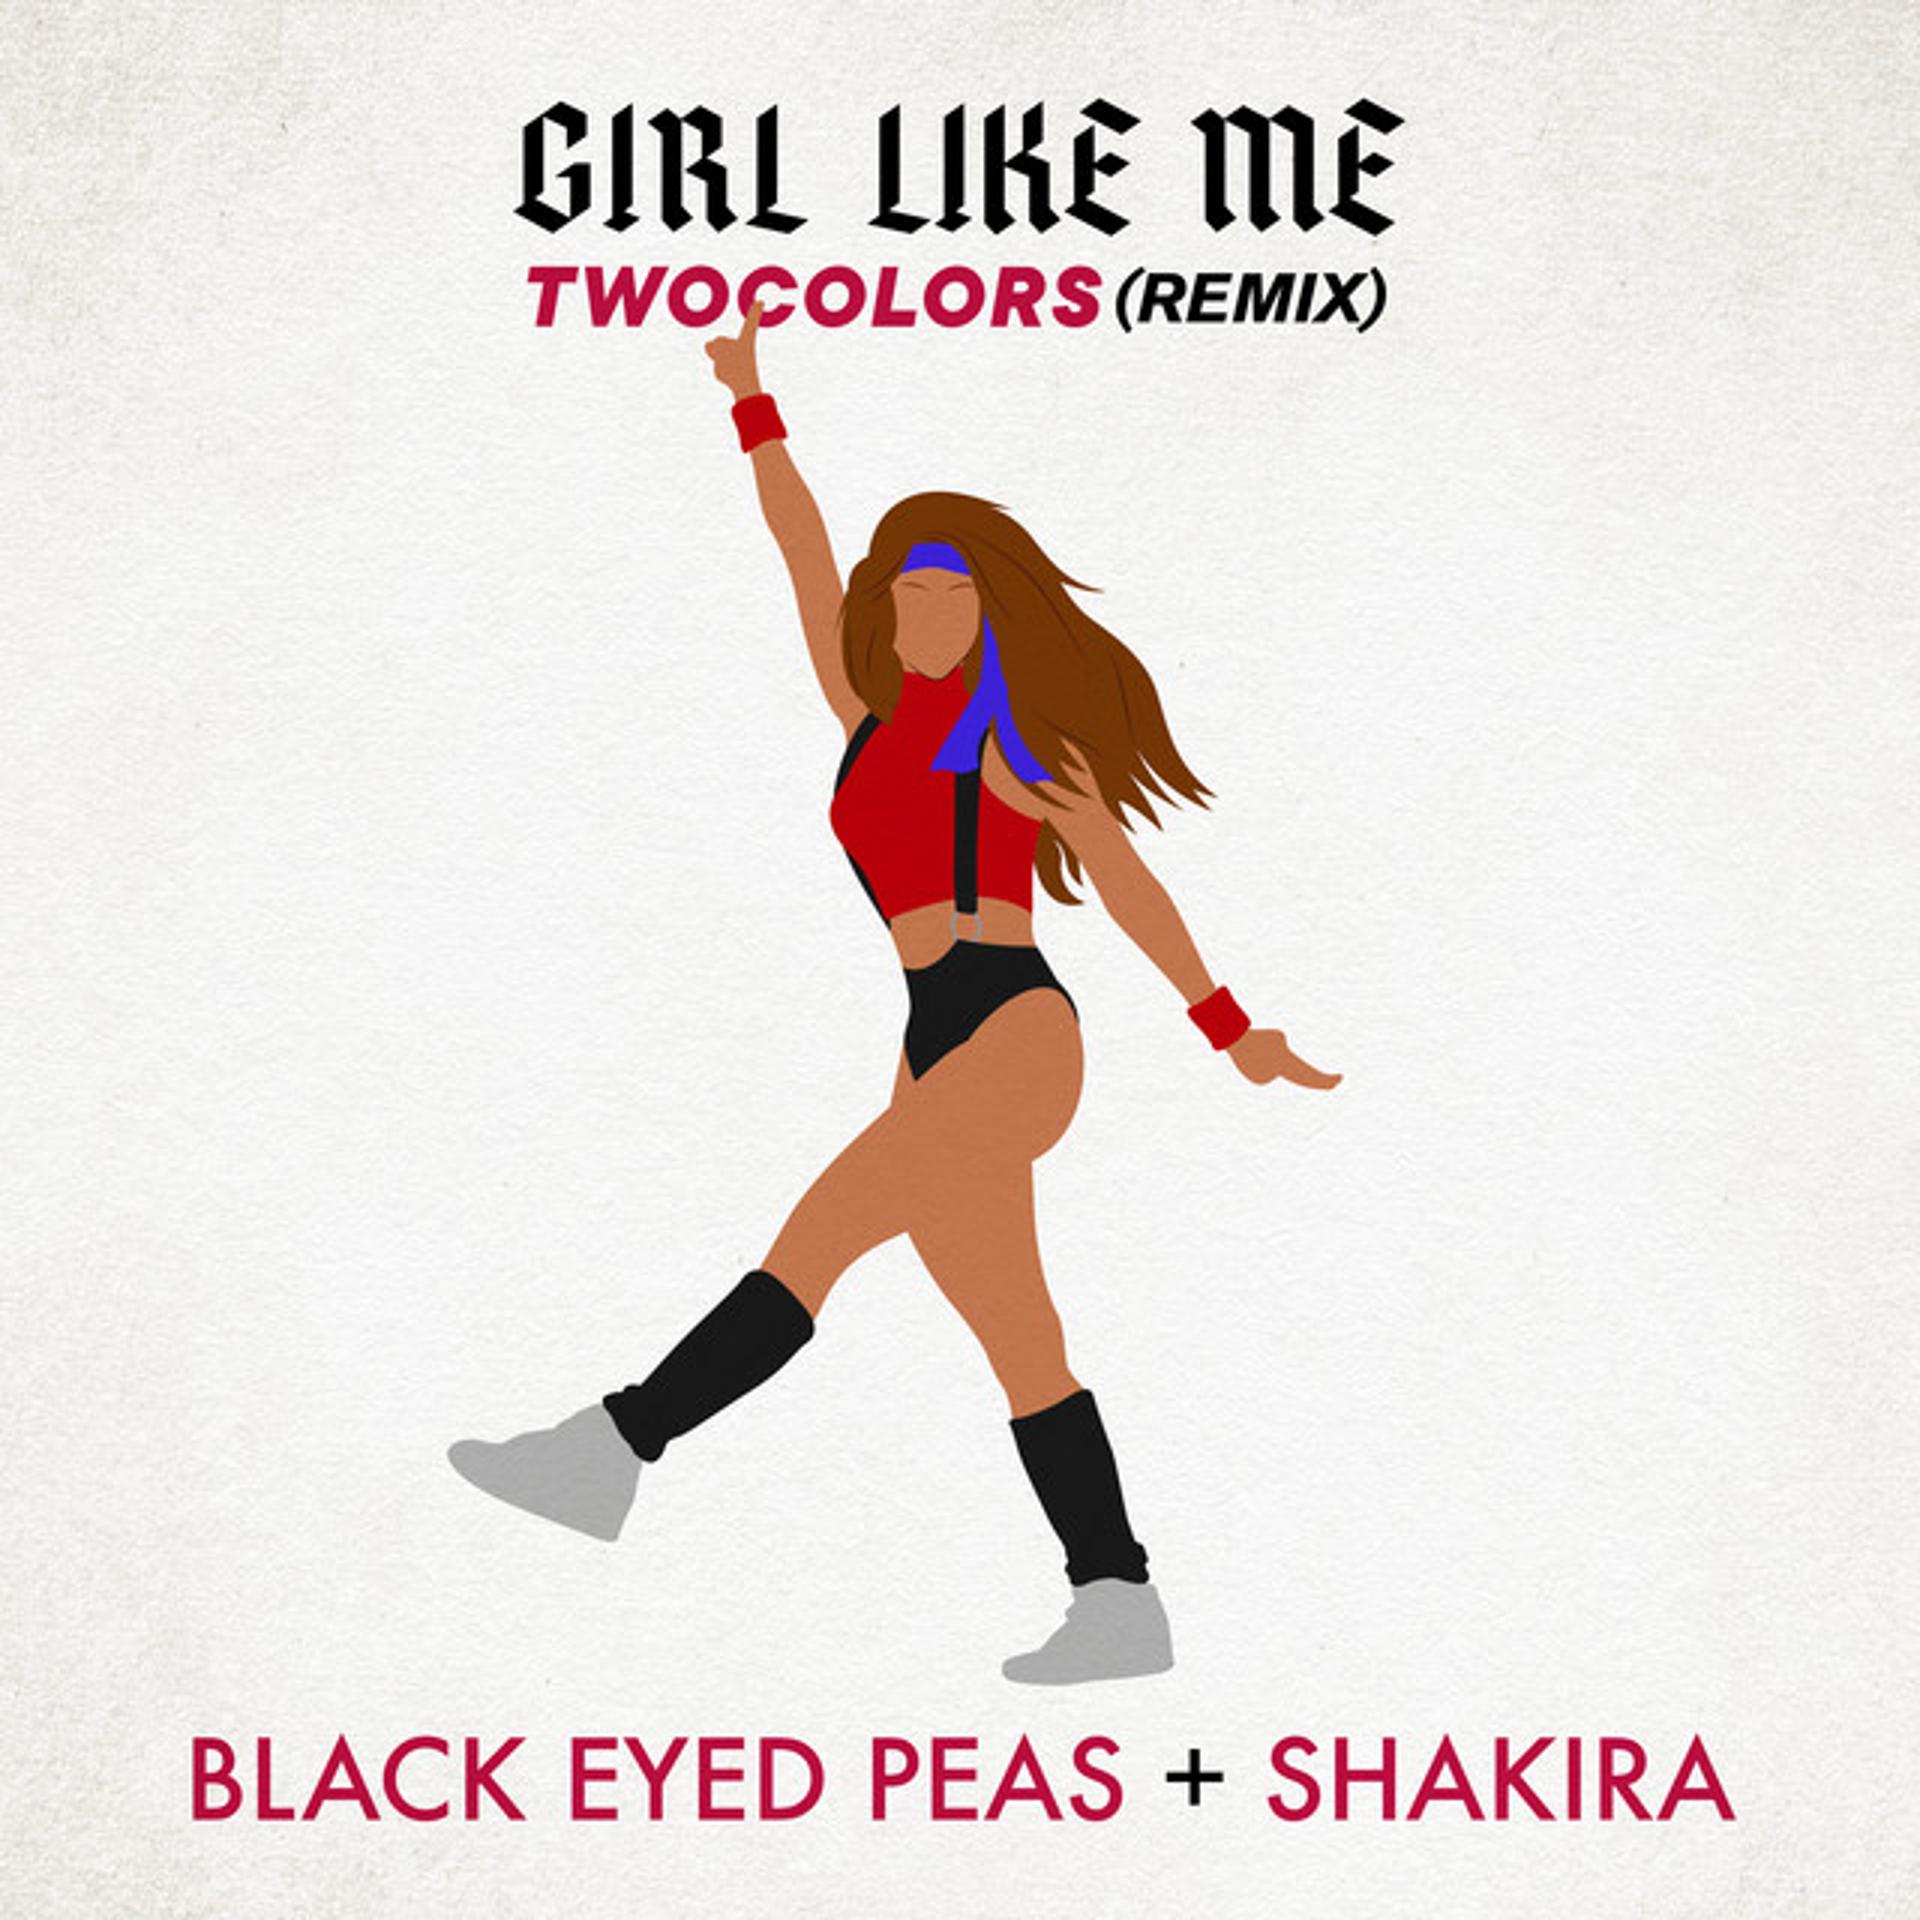 I like girl they like me. Black eyed Peas, Shakira - girl like me. Black eyed Peas, Shakira & TWOCOLORS. Black eyed Peas girl.